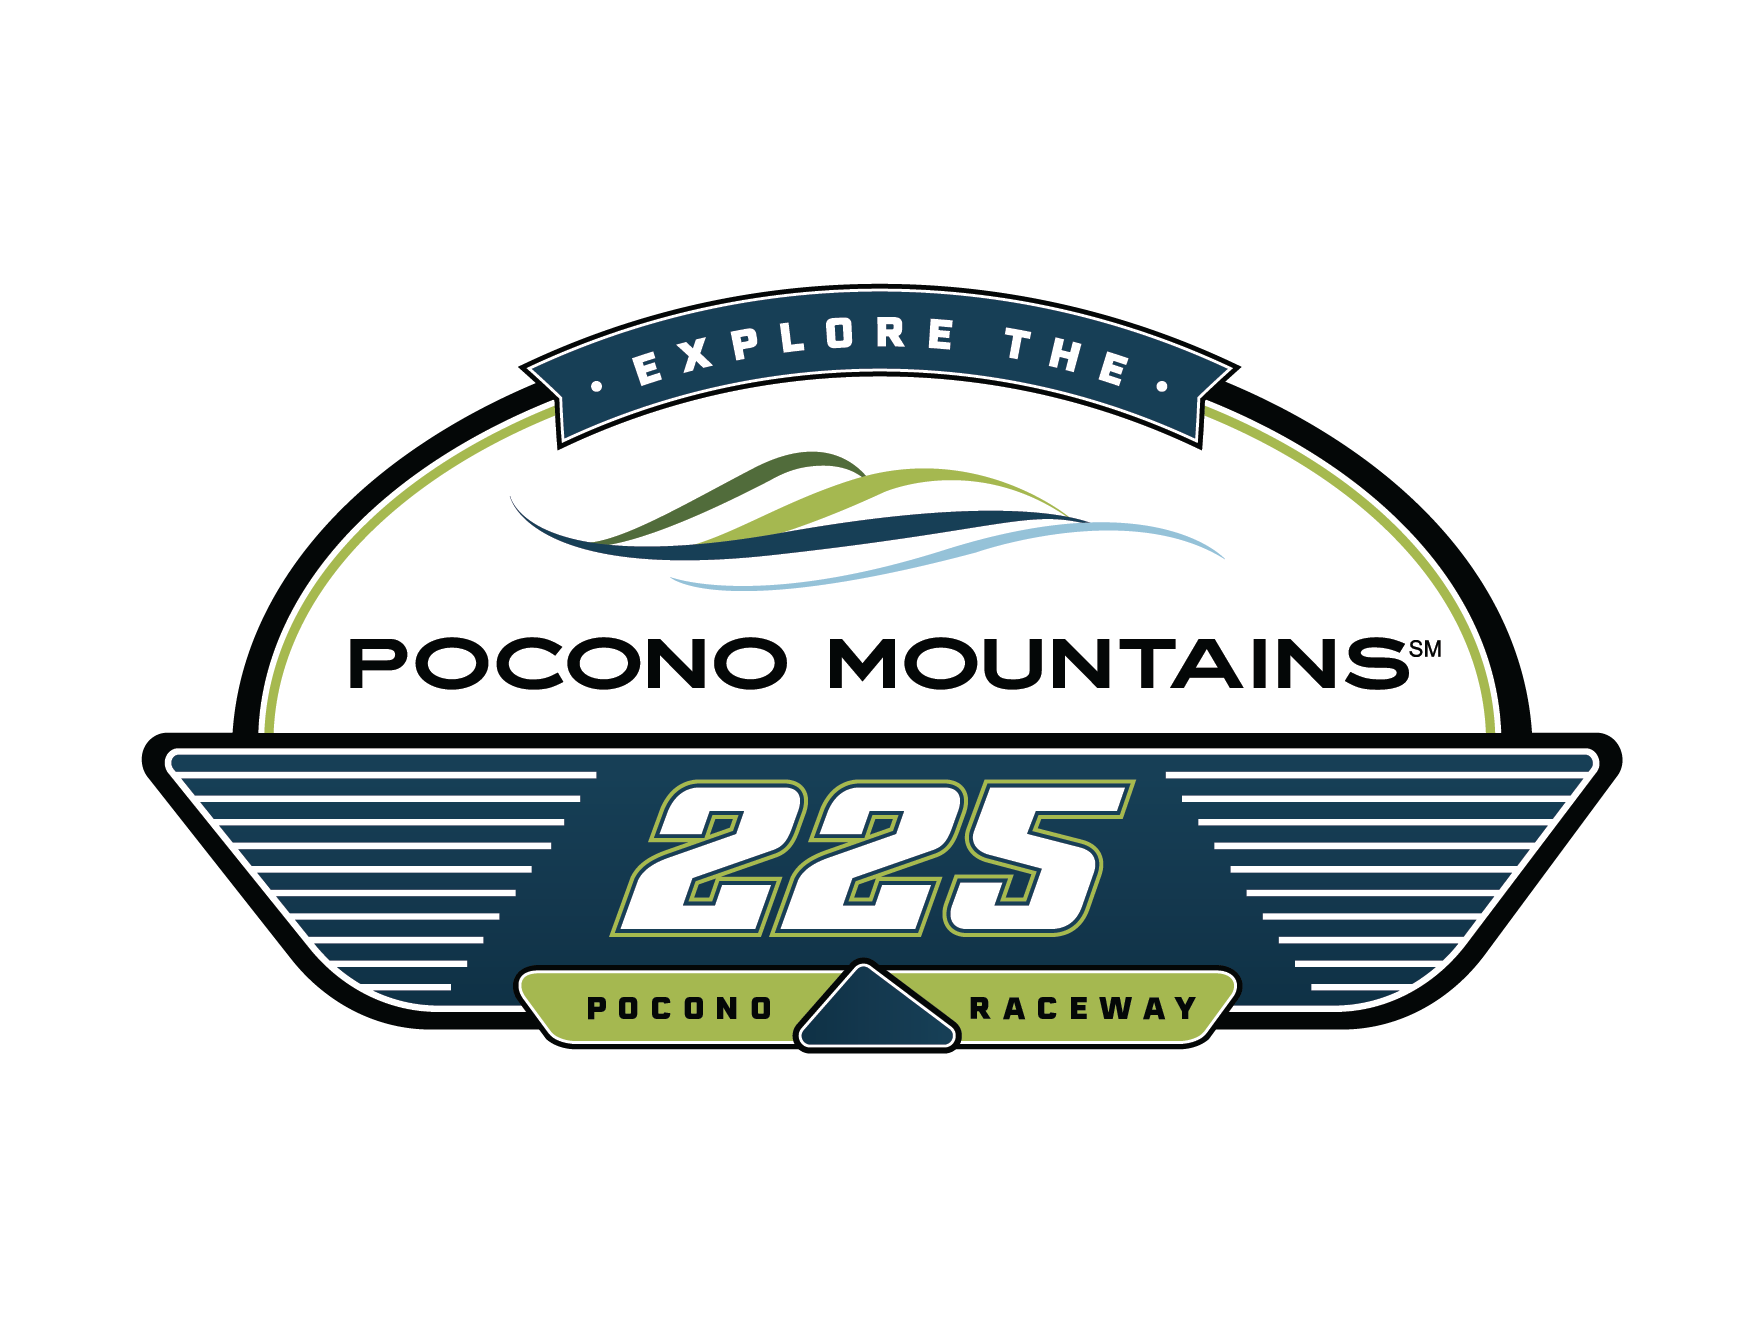 Explore The Pocono Mountains 225